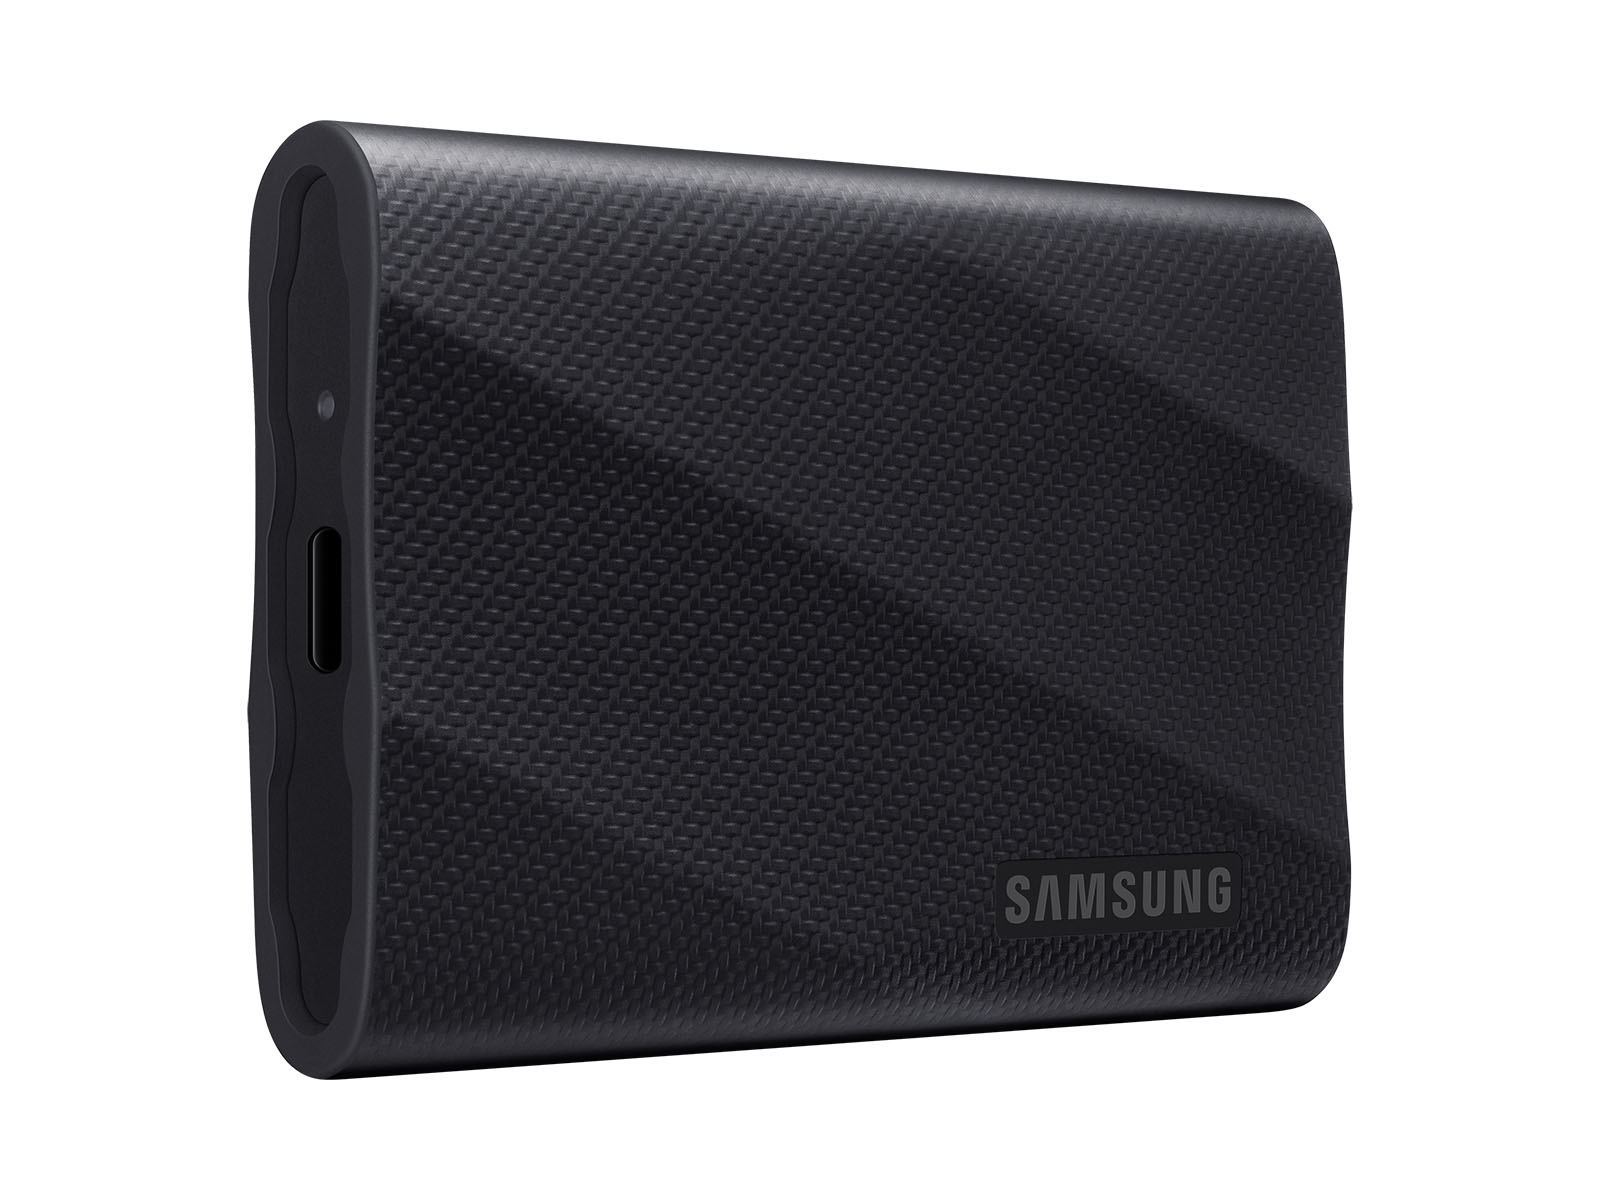 Thumbnail image of Portable SSD T9 USB 3.2 Gen2x2 1TB (Black)